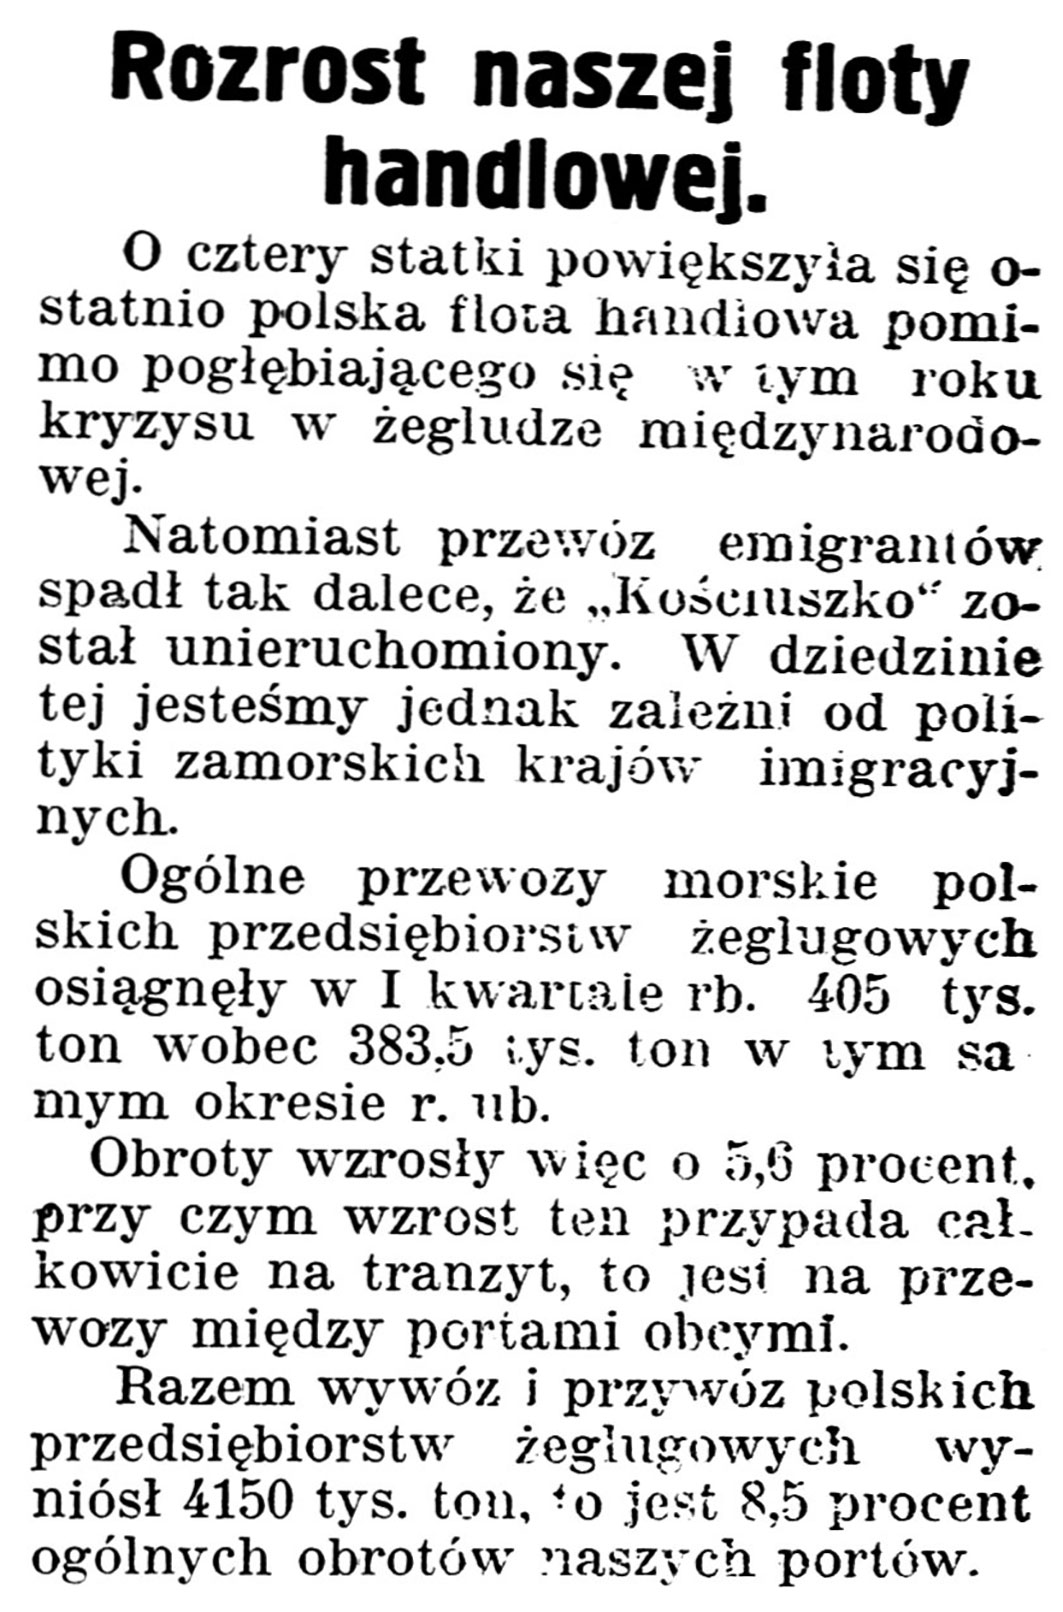 [Rozrost naszej floty handlowej] // Gazeta Kartuska. - 1939, nr 68, s. 3